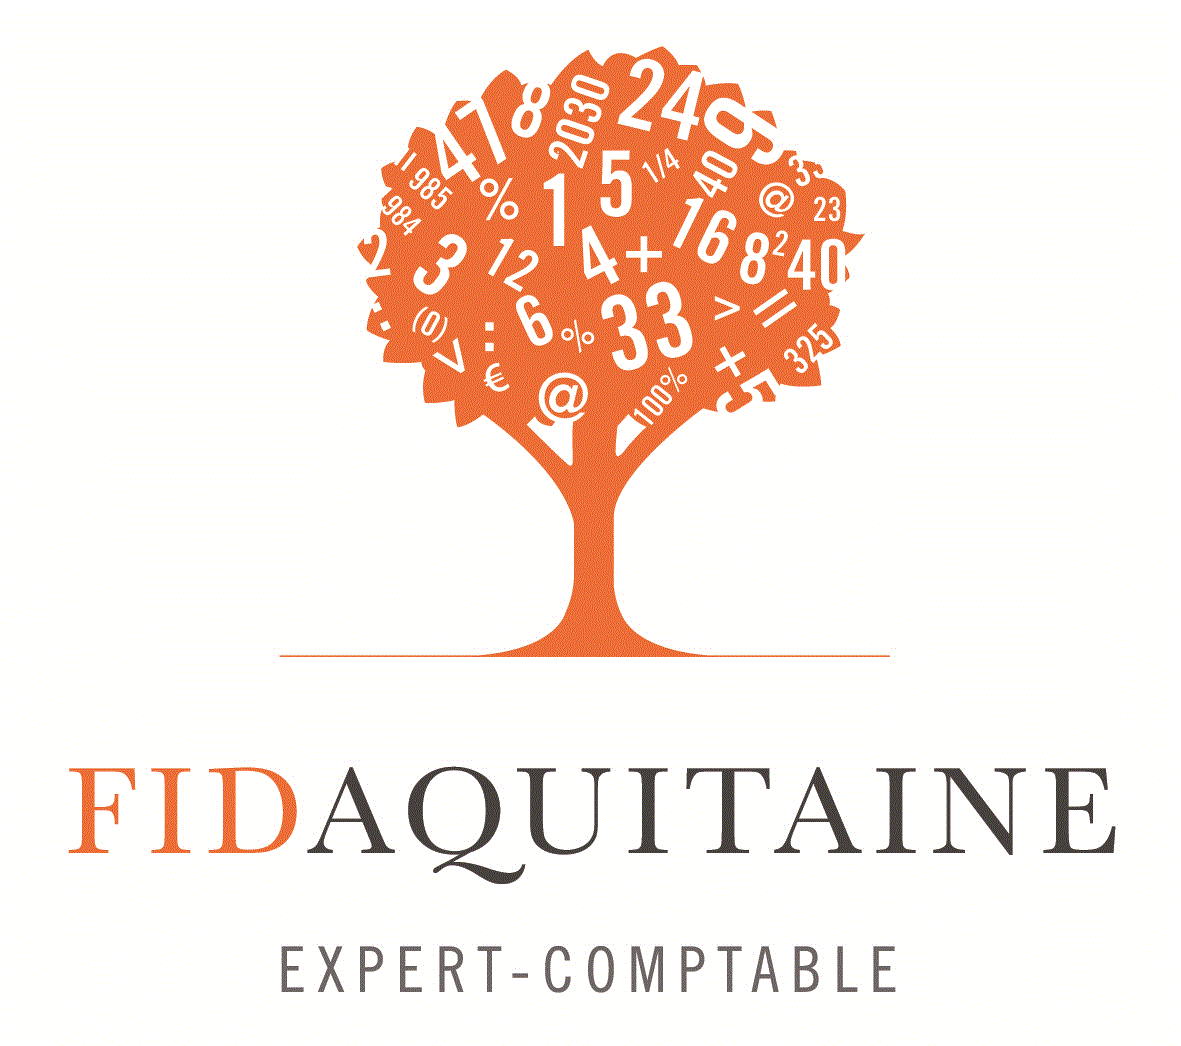 Fidaquitaine Expertise Comptable